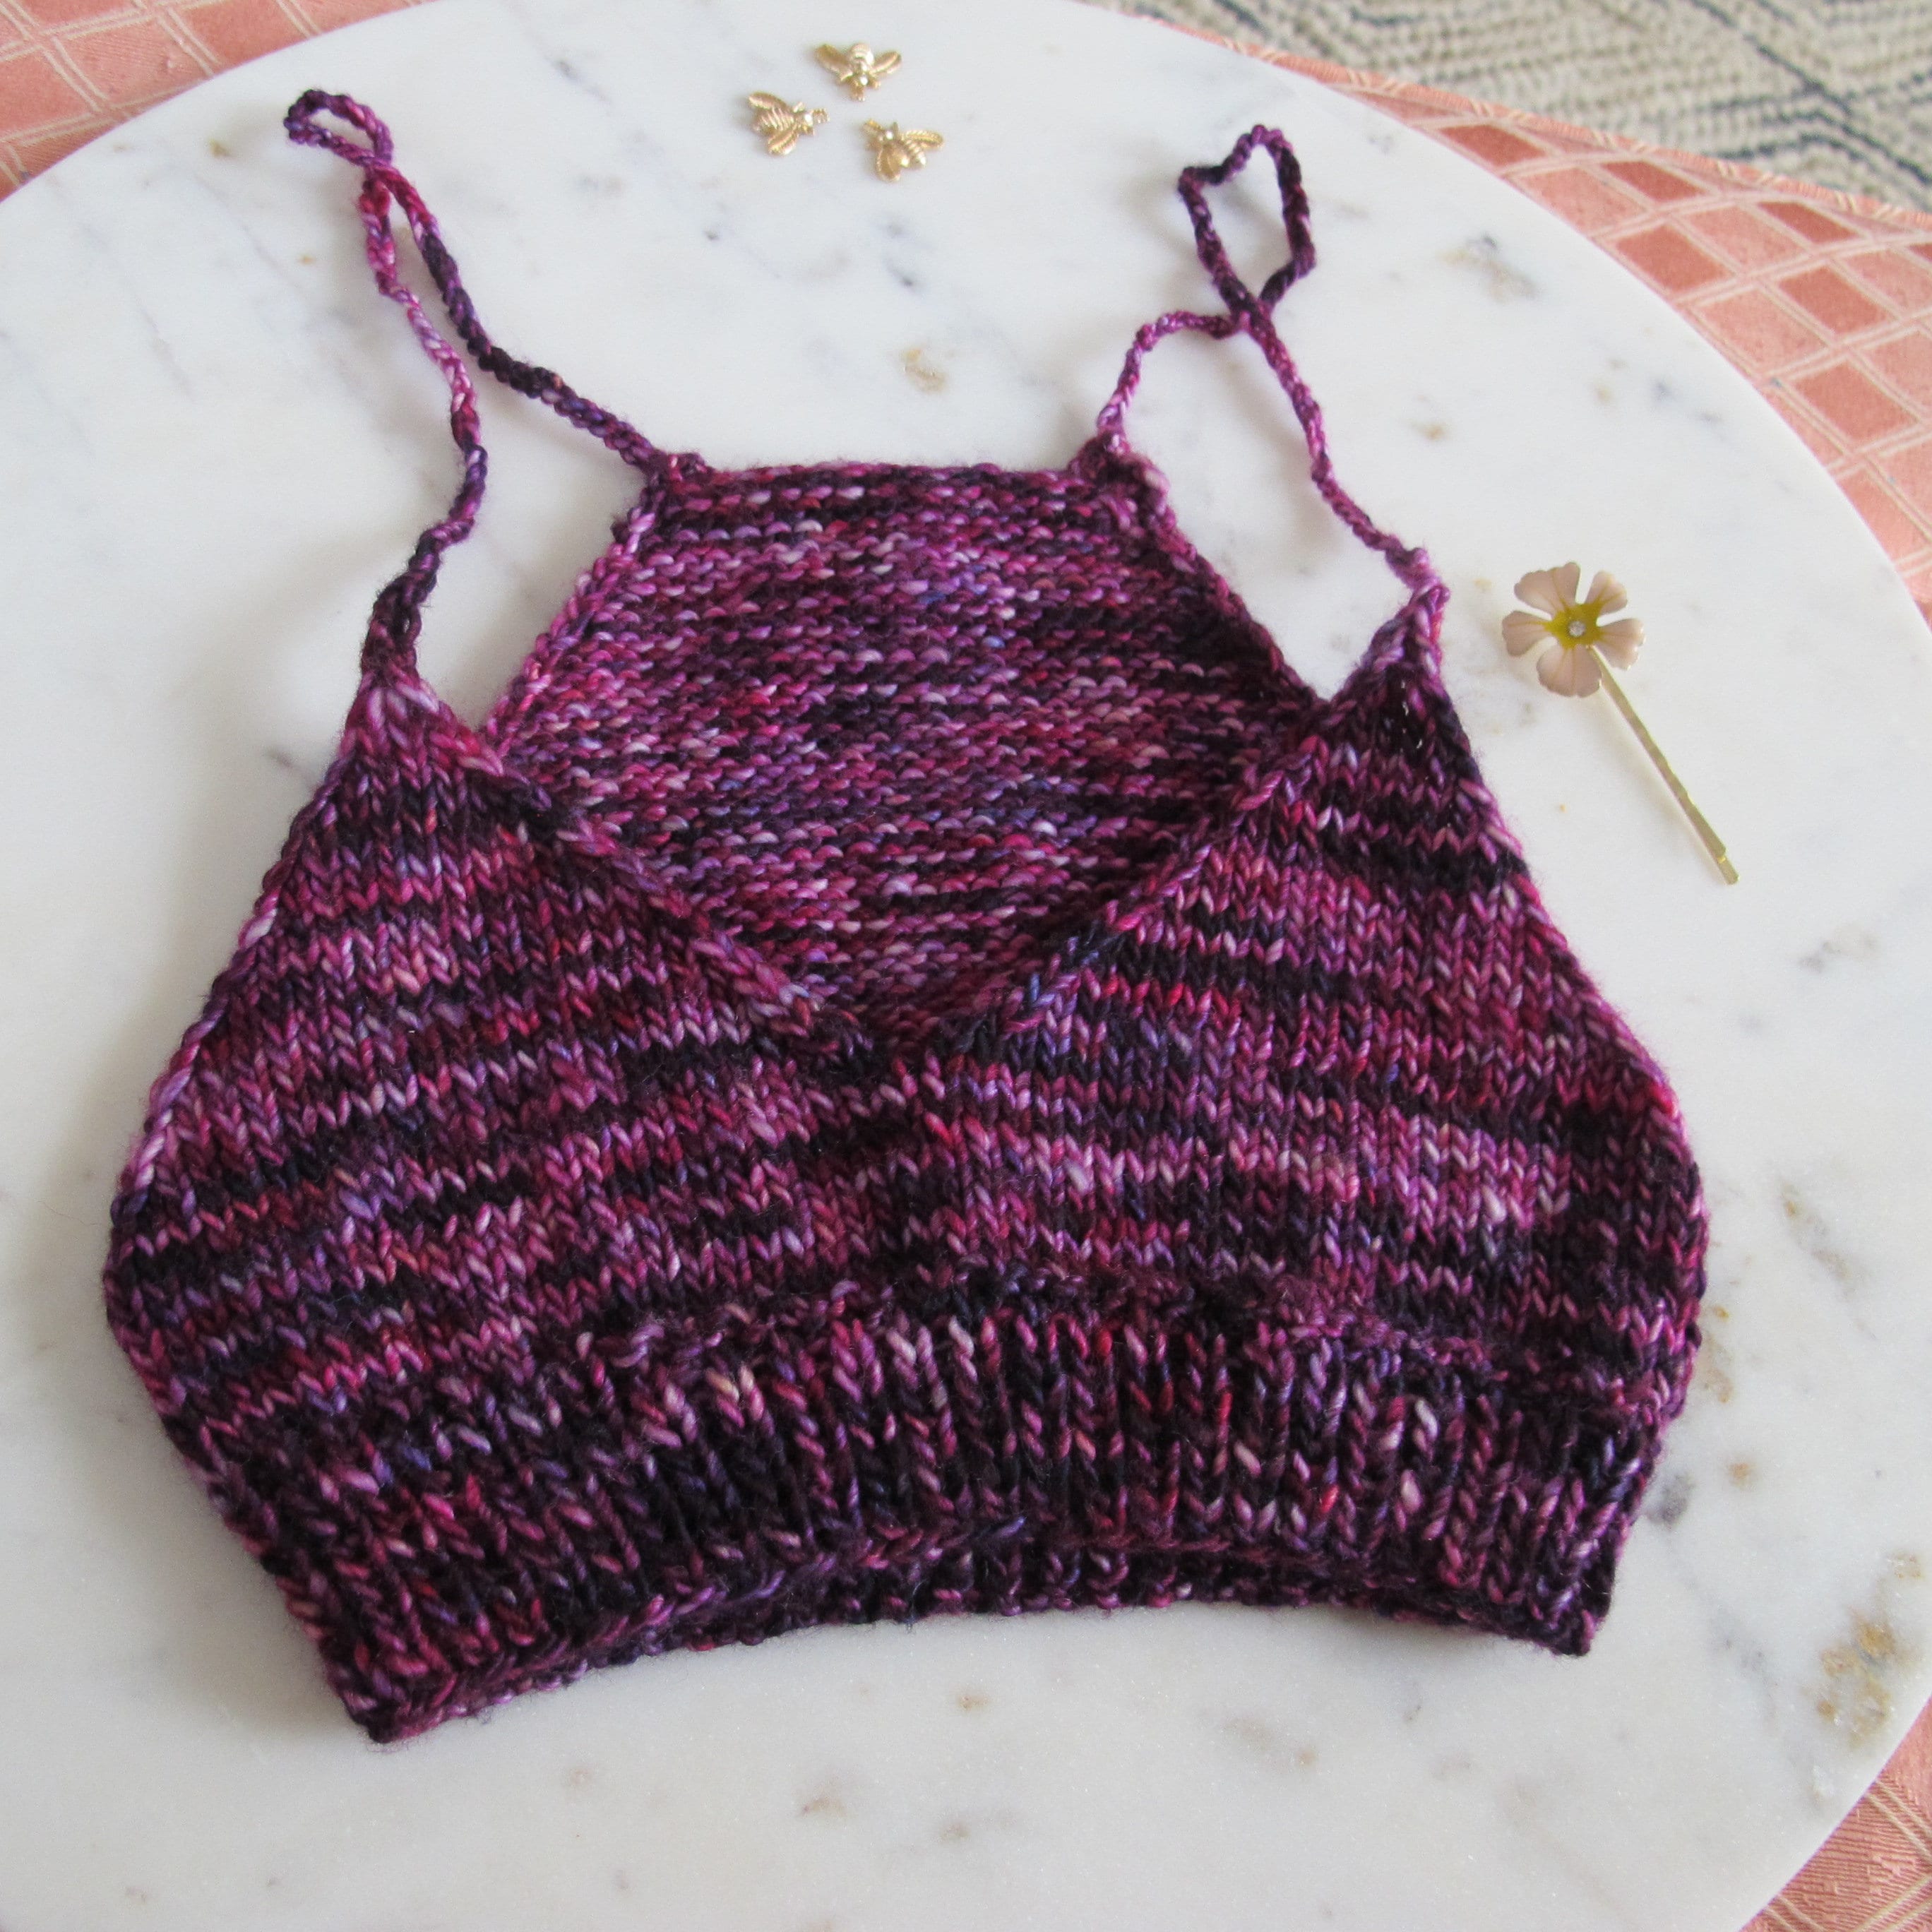 Crochet Bralette, Merino Wool Top for Summer, Hand-crocheted Crop